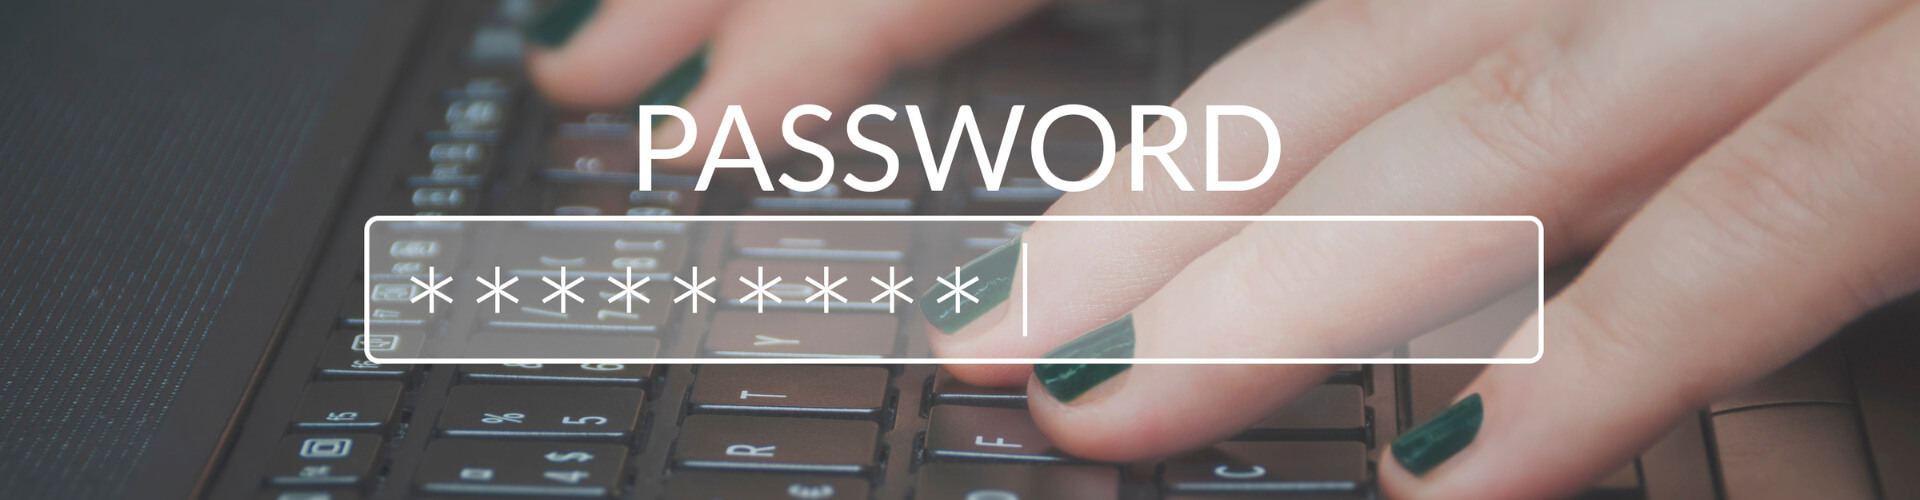 RES-Cybersecurity-Password